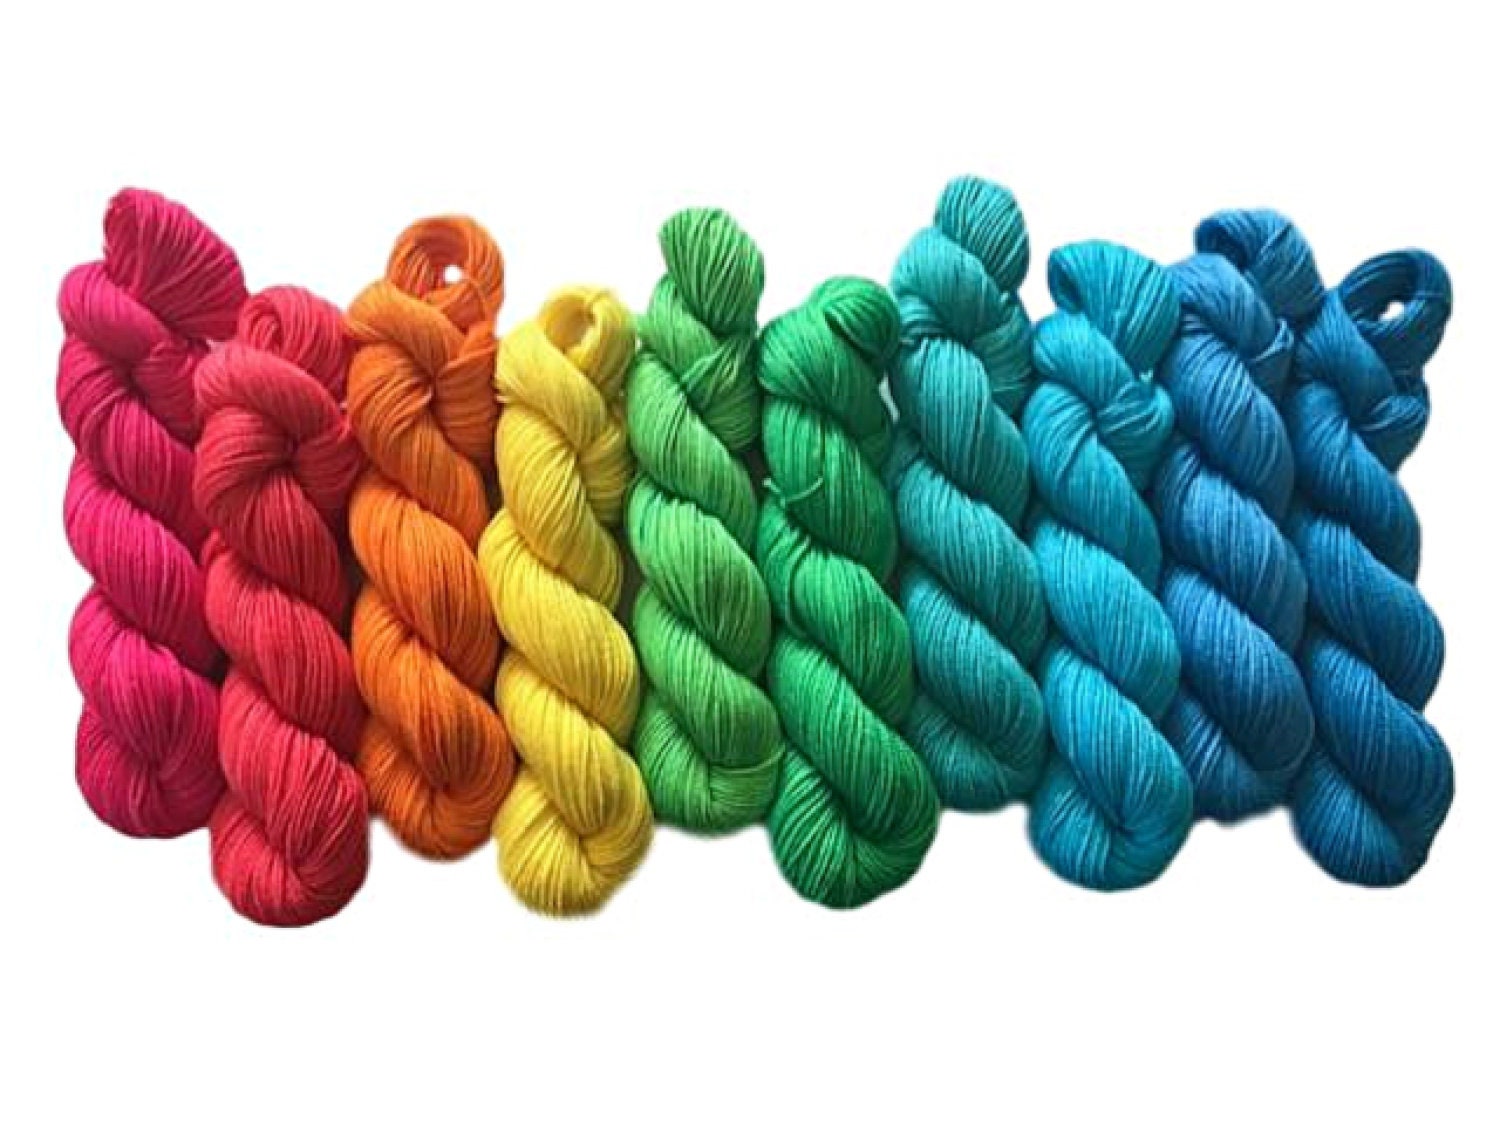 Hand Dyed Vegan Yarn Kit - Neon Rainbow - Fingering / Sock Wt Thread - Bamboo Cotton Blend - 3 Ply Soft Artisan Fiber - Semi Solids / Tonals